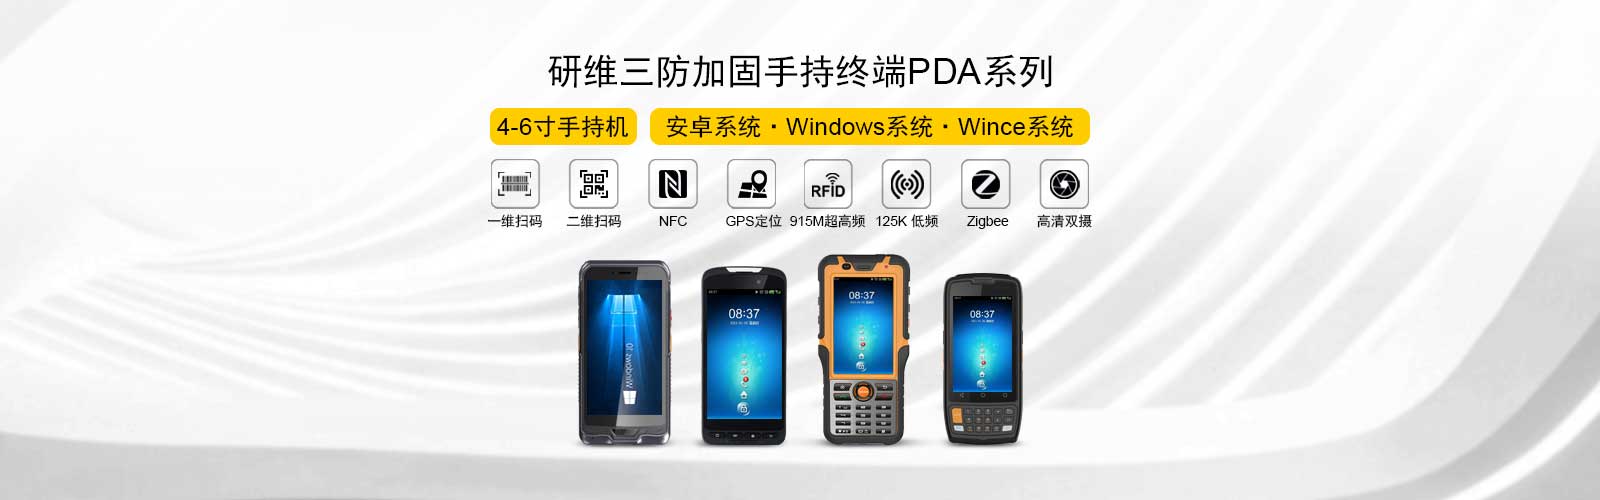 UC8体育三防加固手持平板電腦PDA，4、5、6寸手持機，安卓系統、windows系統、wince系統，支持一維碼、二維碼、NFC、GPS、超高頻、低頻RFID、Zigbee、高清雙攝像頭